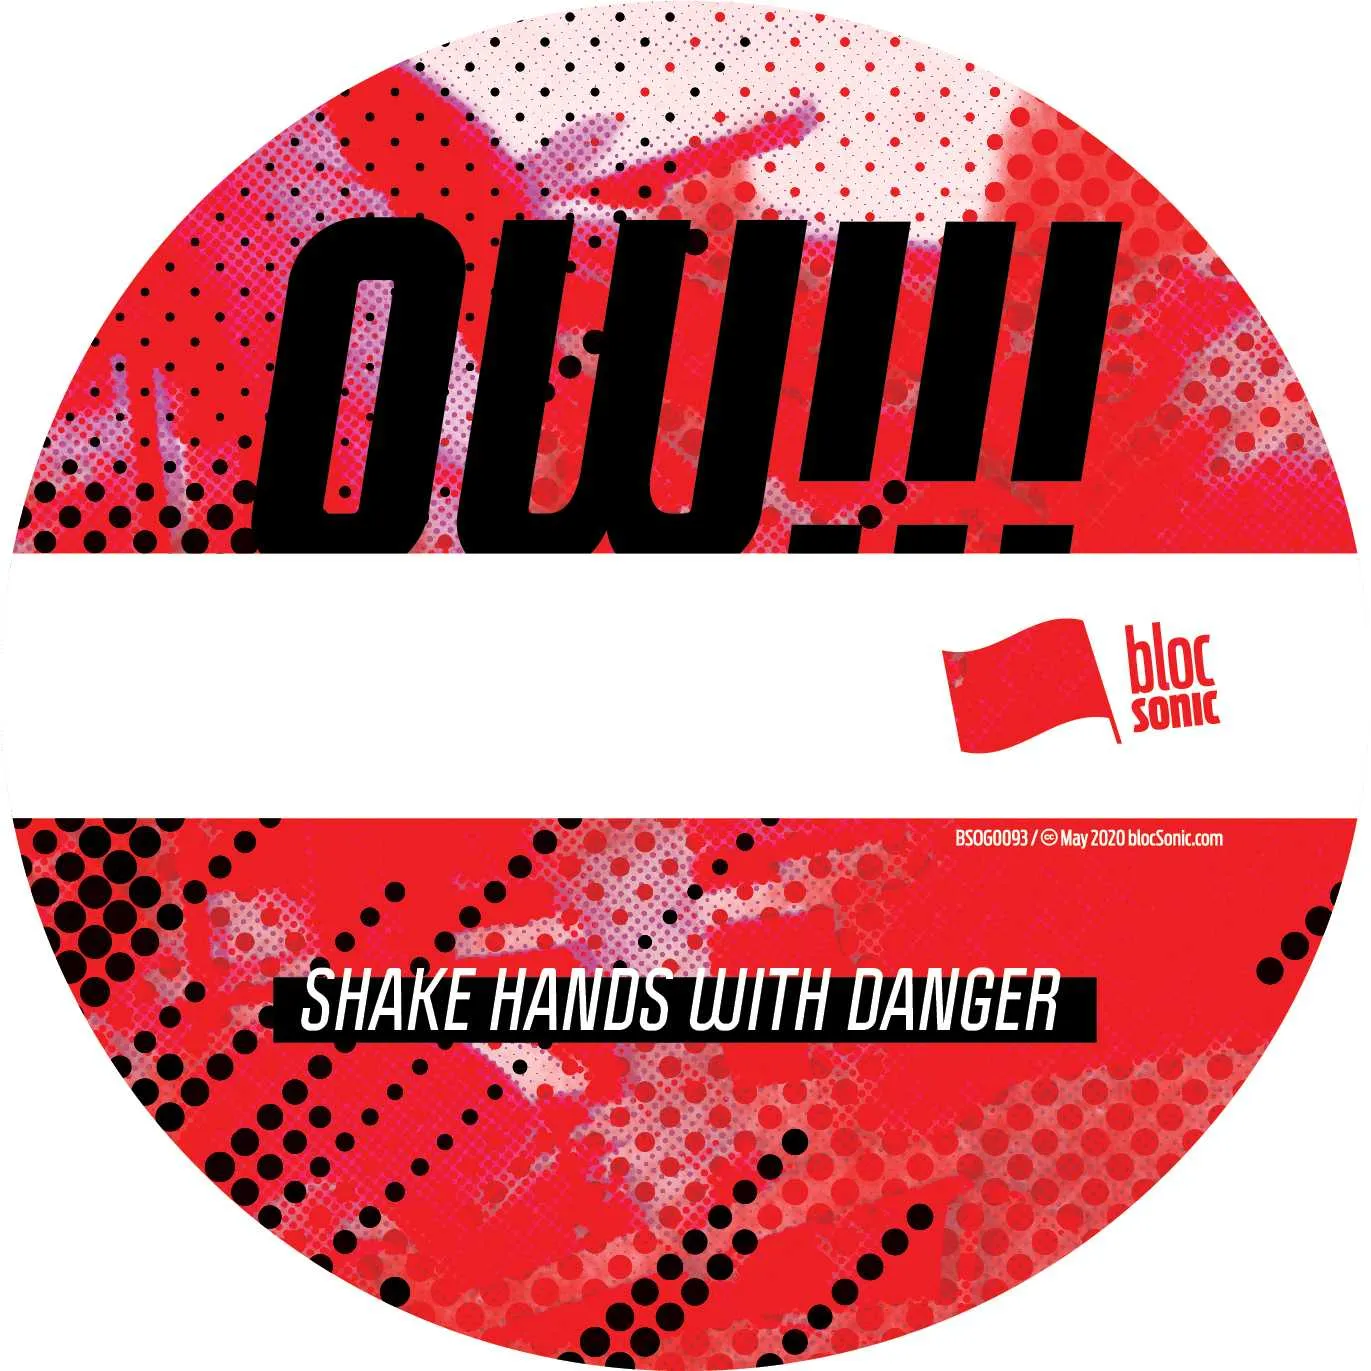 Album disc for “Shake Hands With Danger” by OWTRIPLEBANG